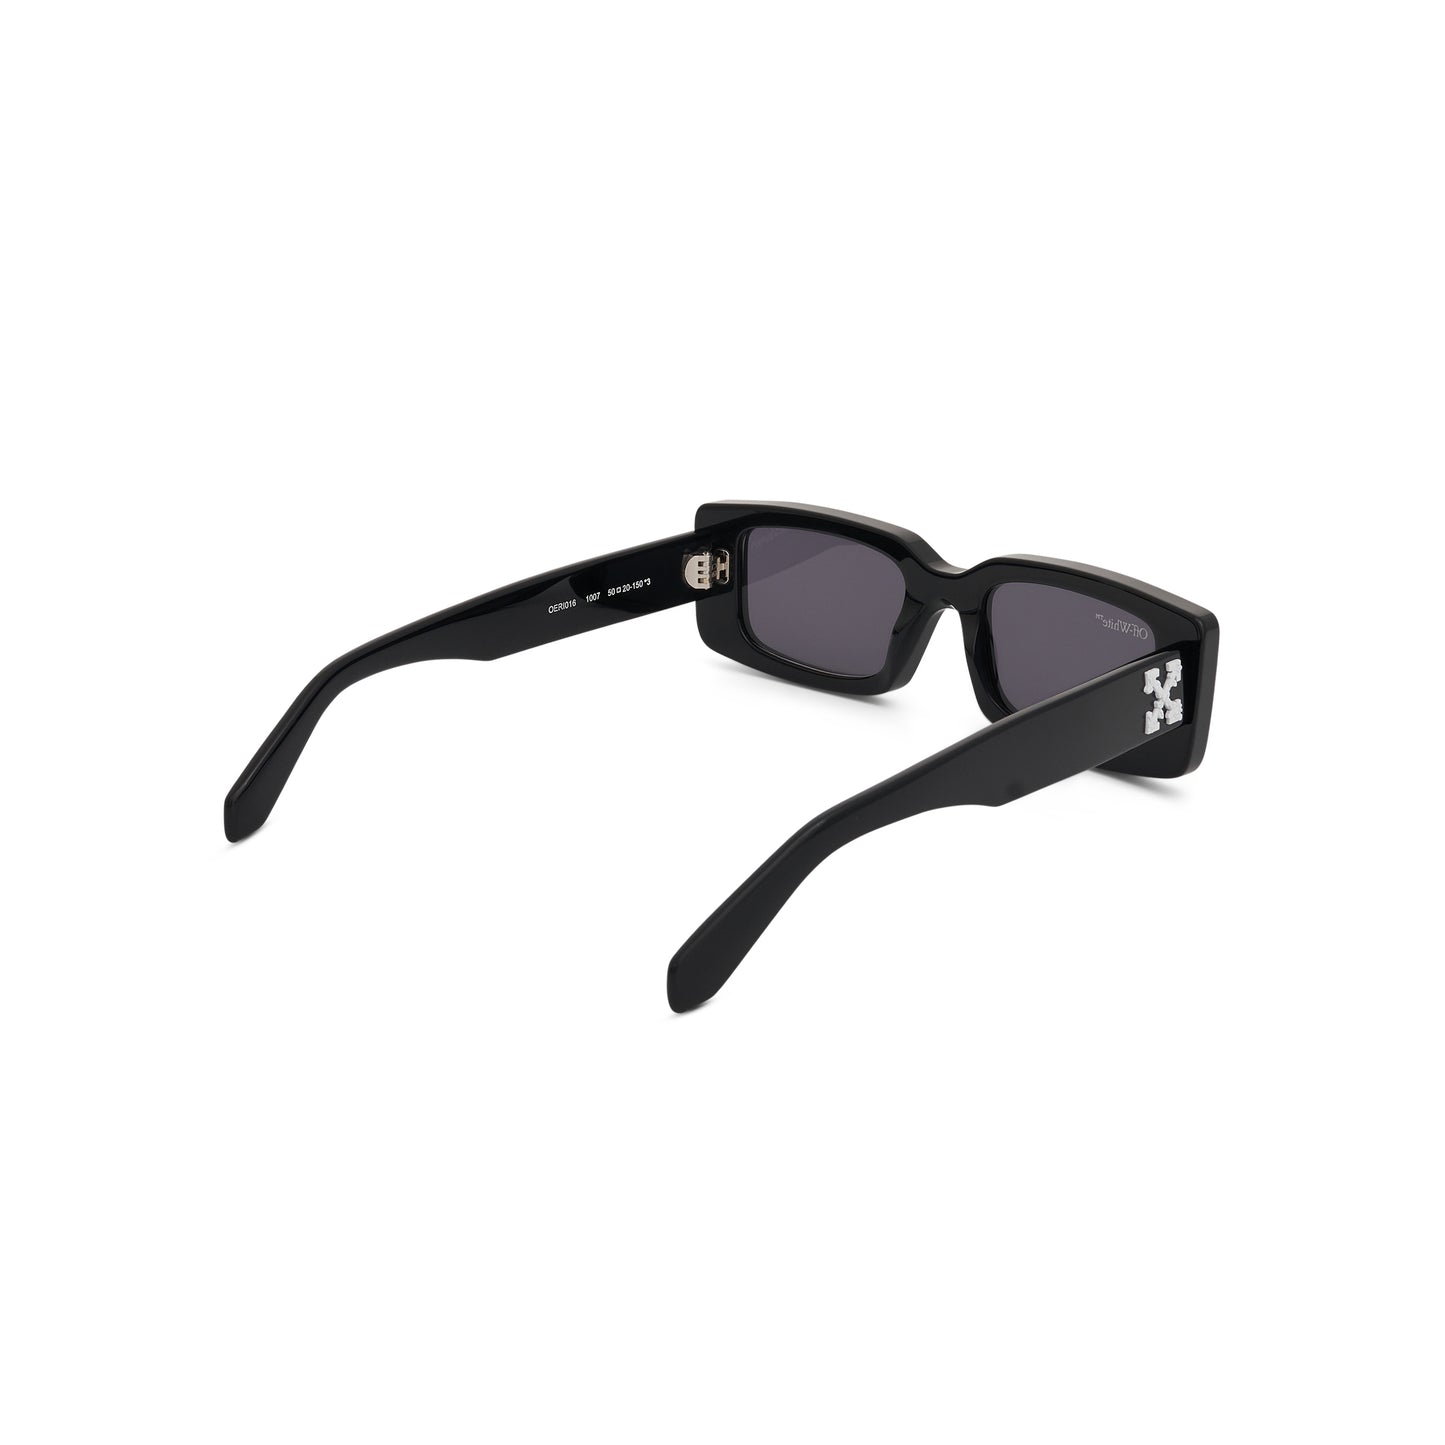 Arthur Sunglasses in Black/Dark Grey